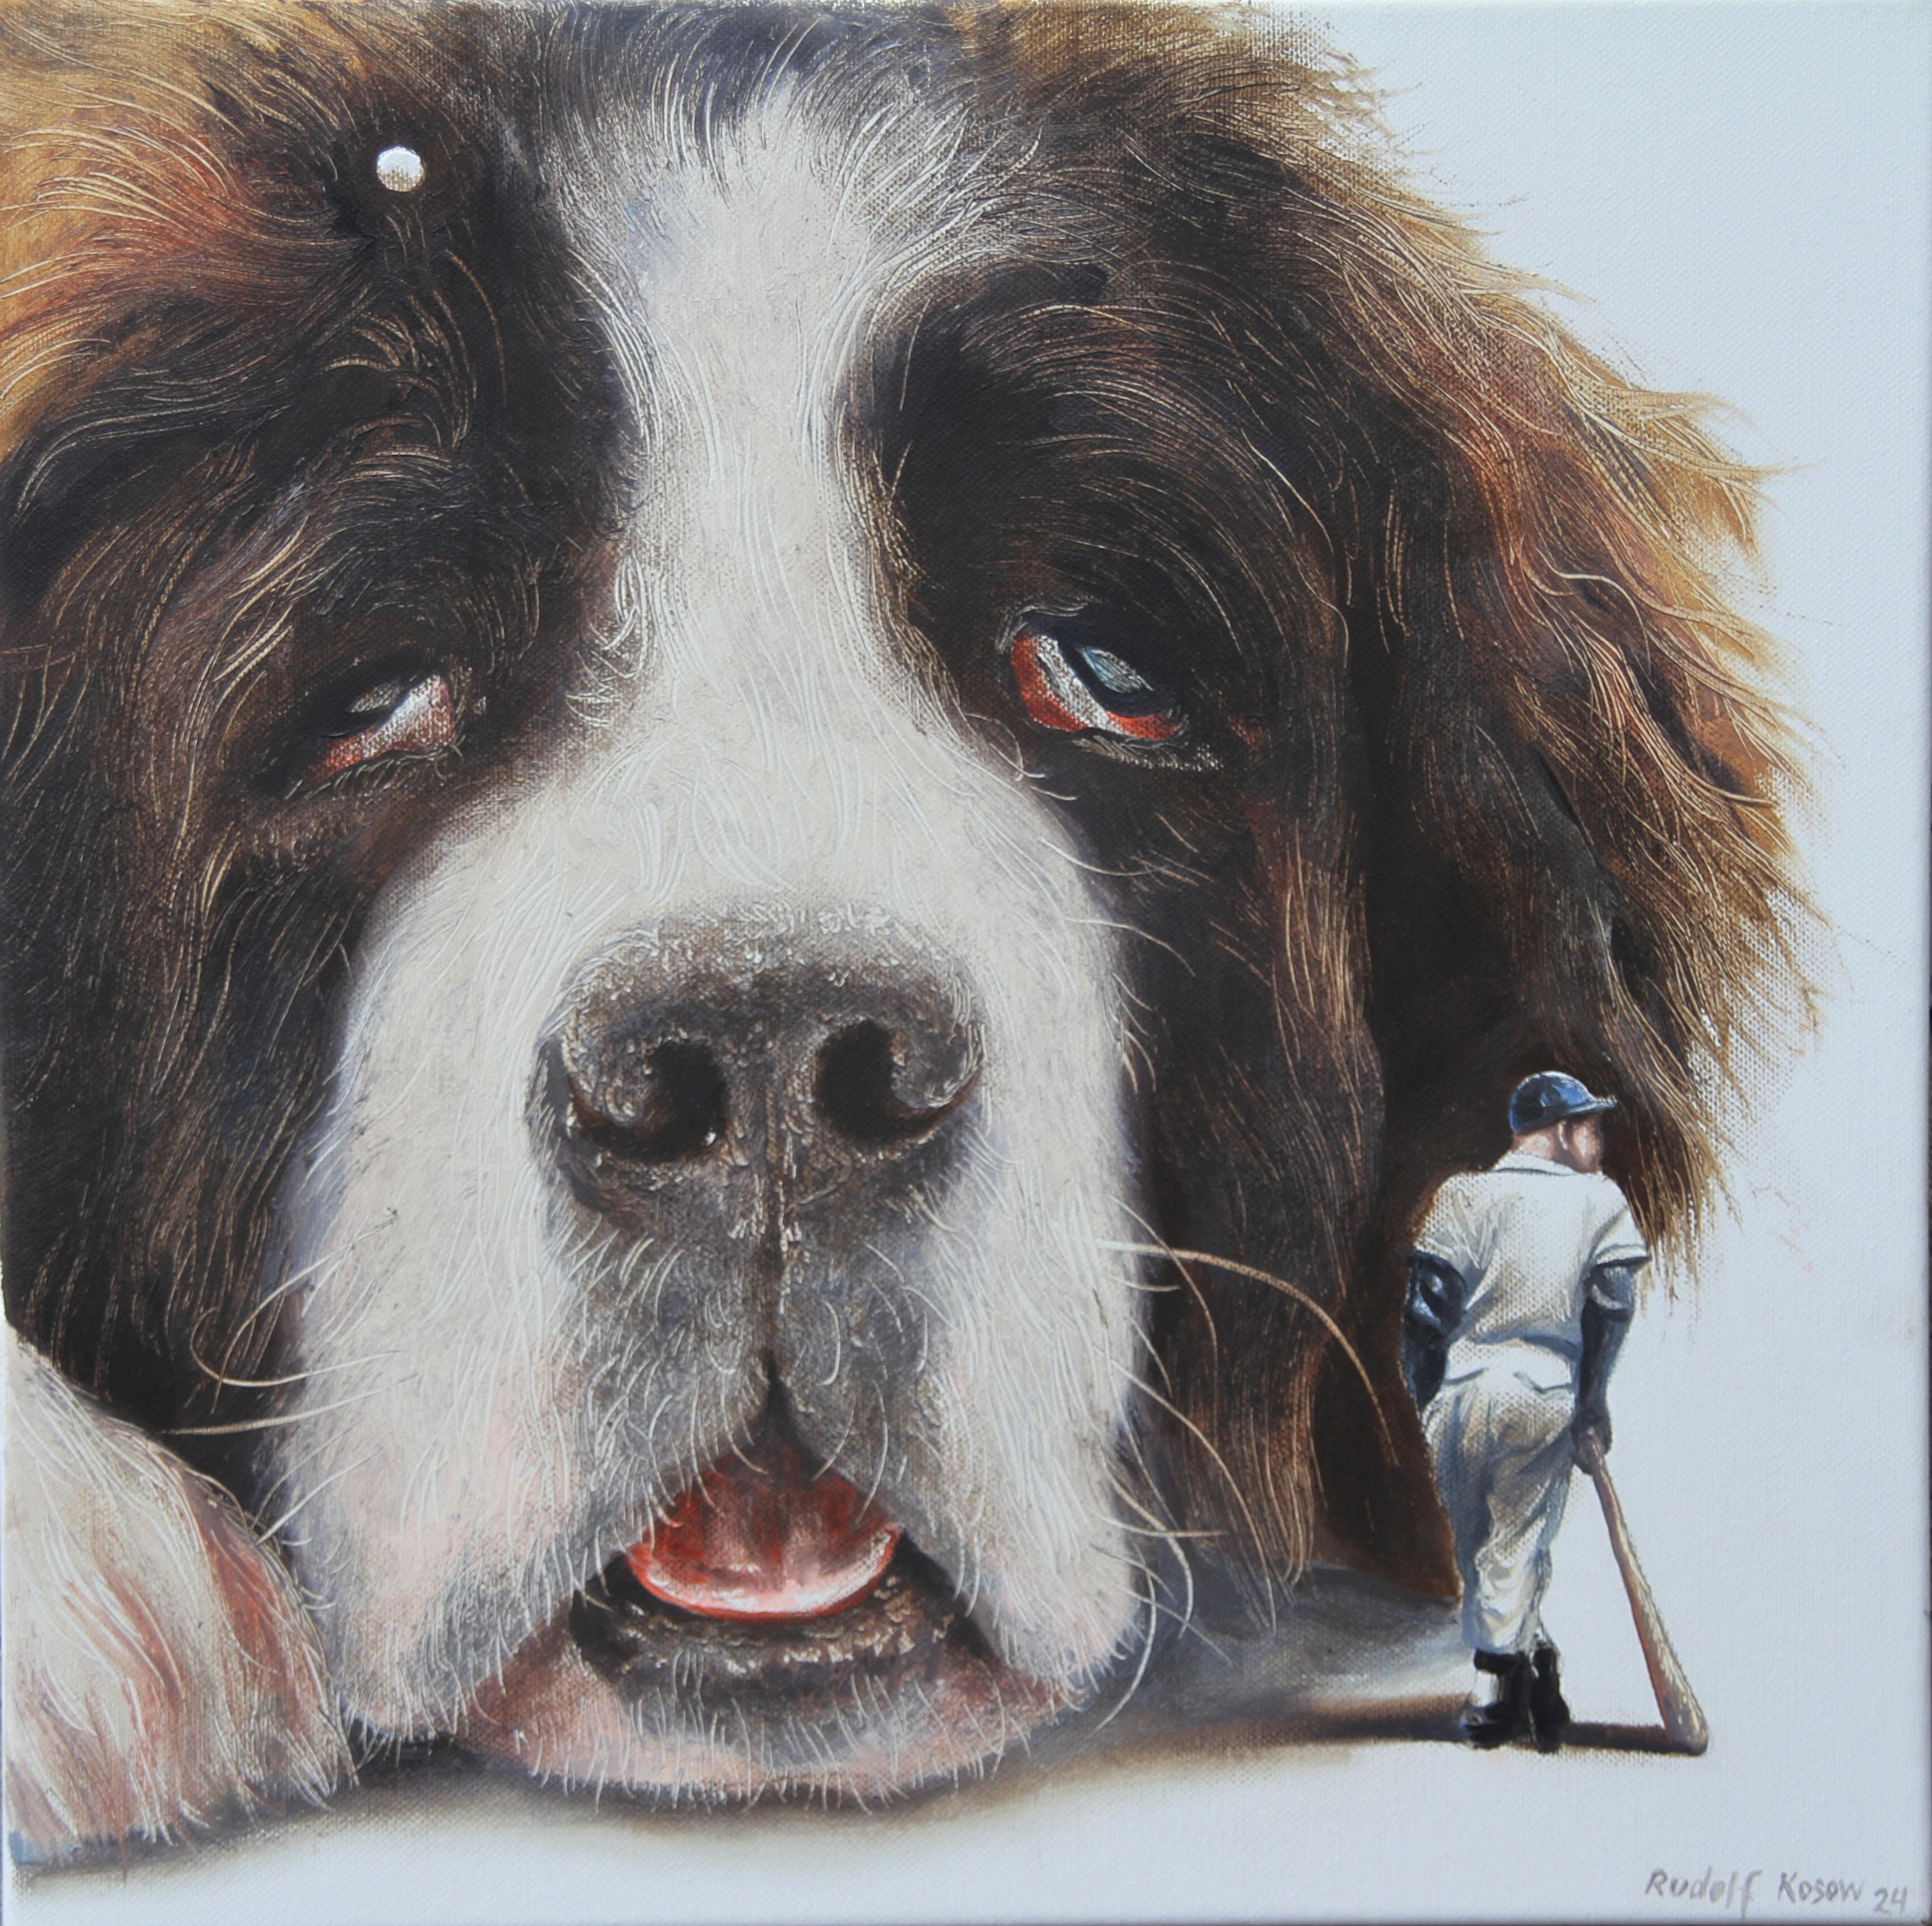 Lazybone (st-bernard, dog pet, baseball, vintage, animal, surrealist painting) - Painting by Rudolf Kosow